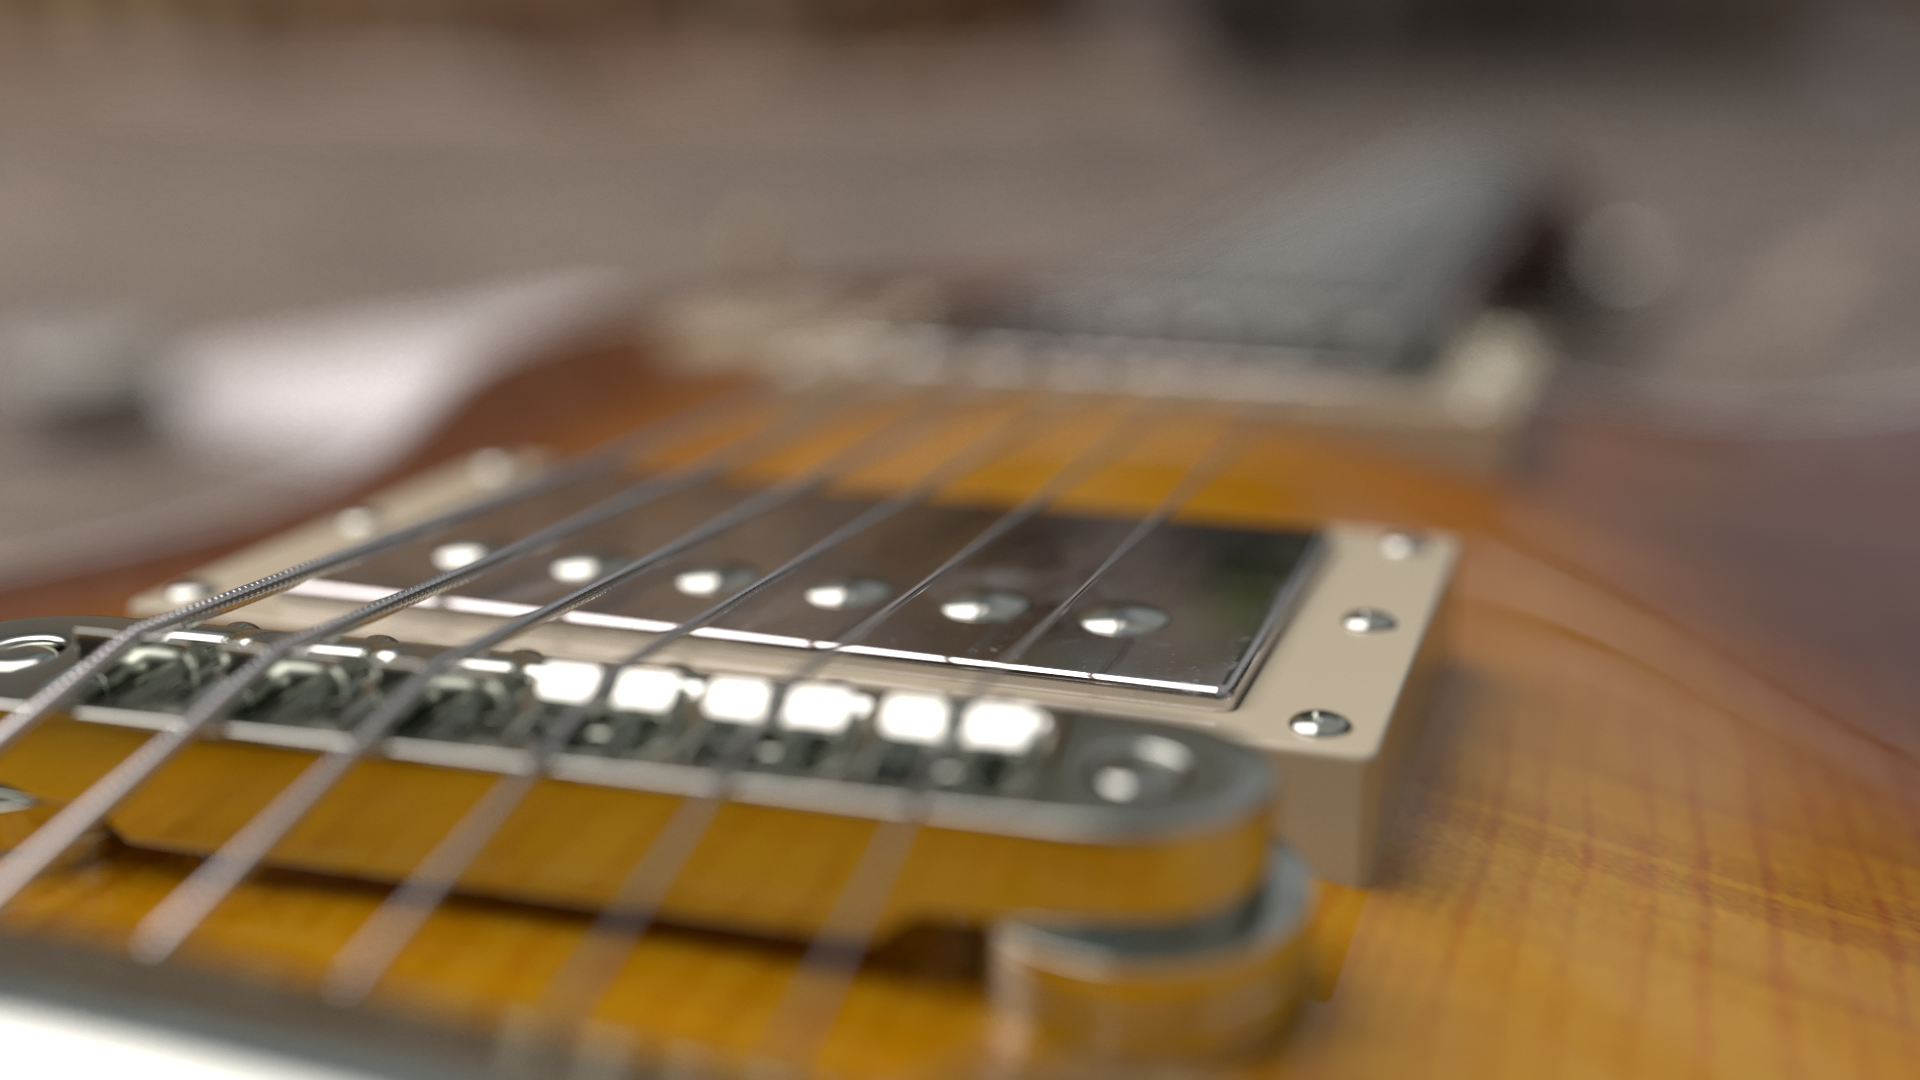 3D-Visualisierung des Steg-Humbuckers eine Gibson Les Paul E-Gitarre mit großer Tiefenunschärfe